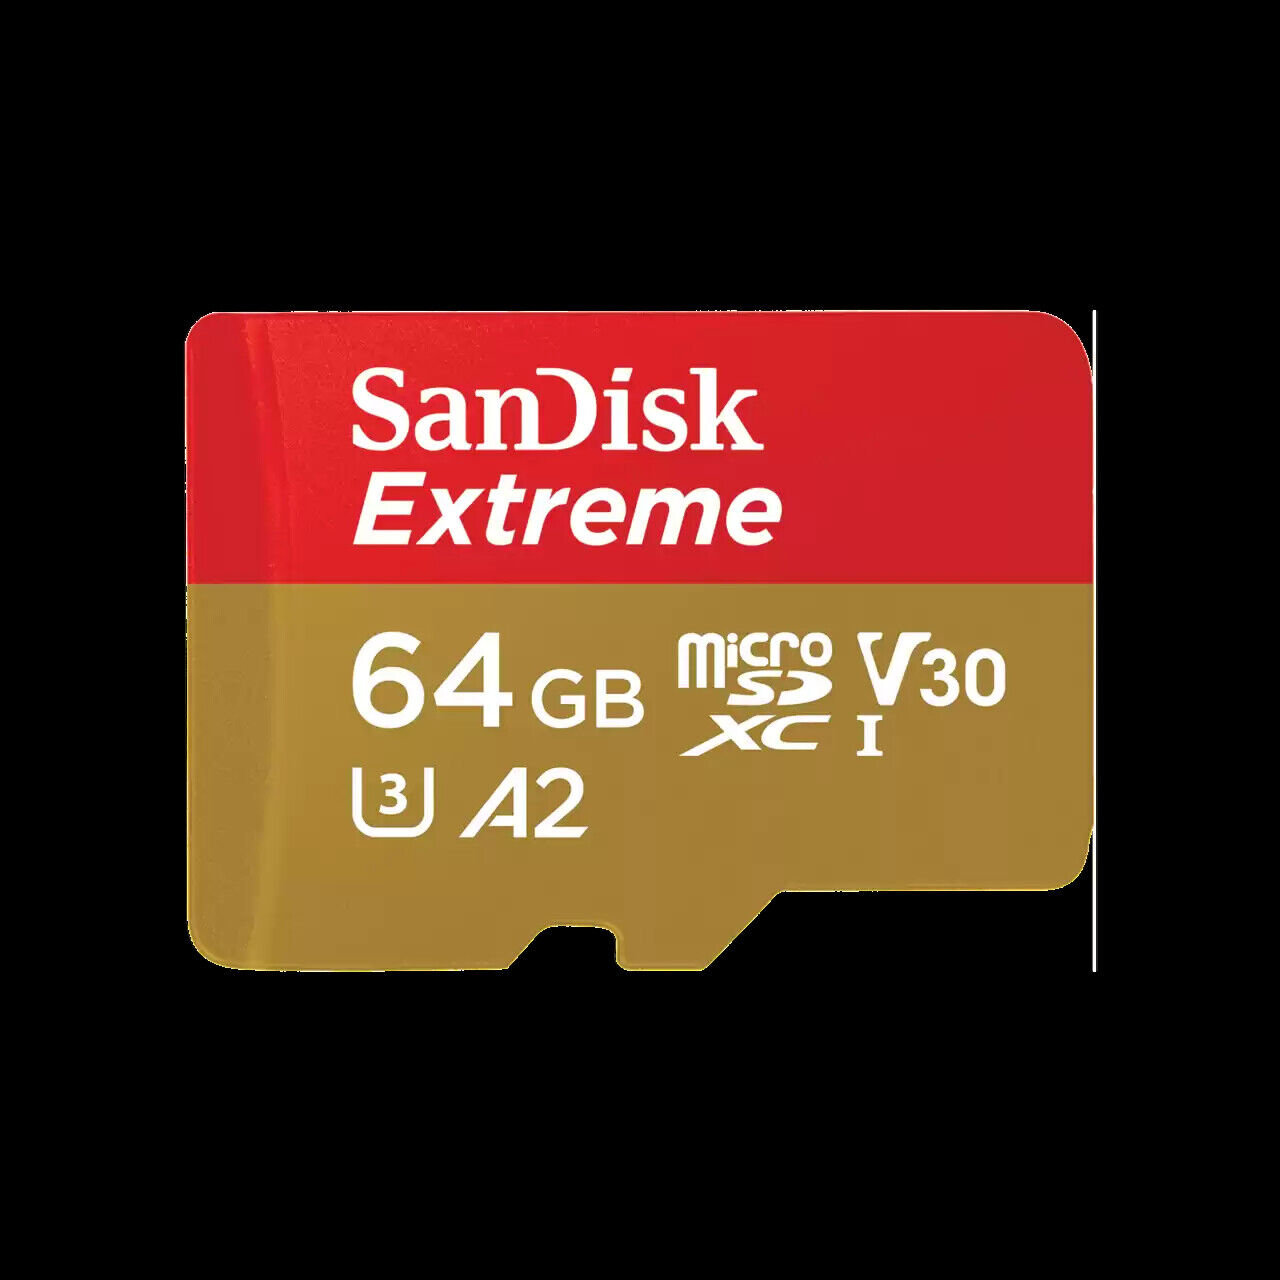 SanDisk 64GB Extreme microSDXC UHS-I Card (Up to 160 MBPs) - SDSQXA2-064G-AN6MA